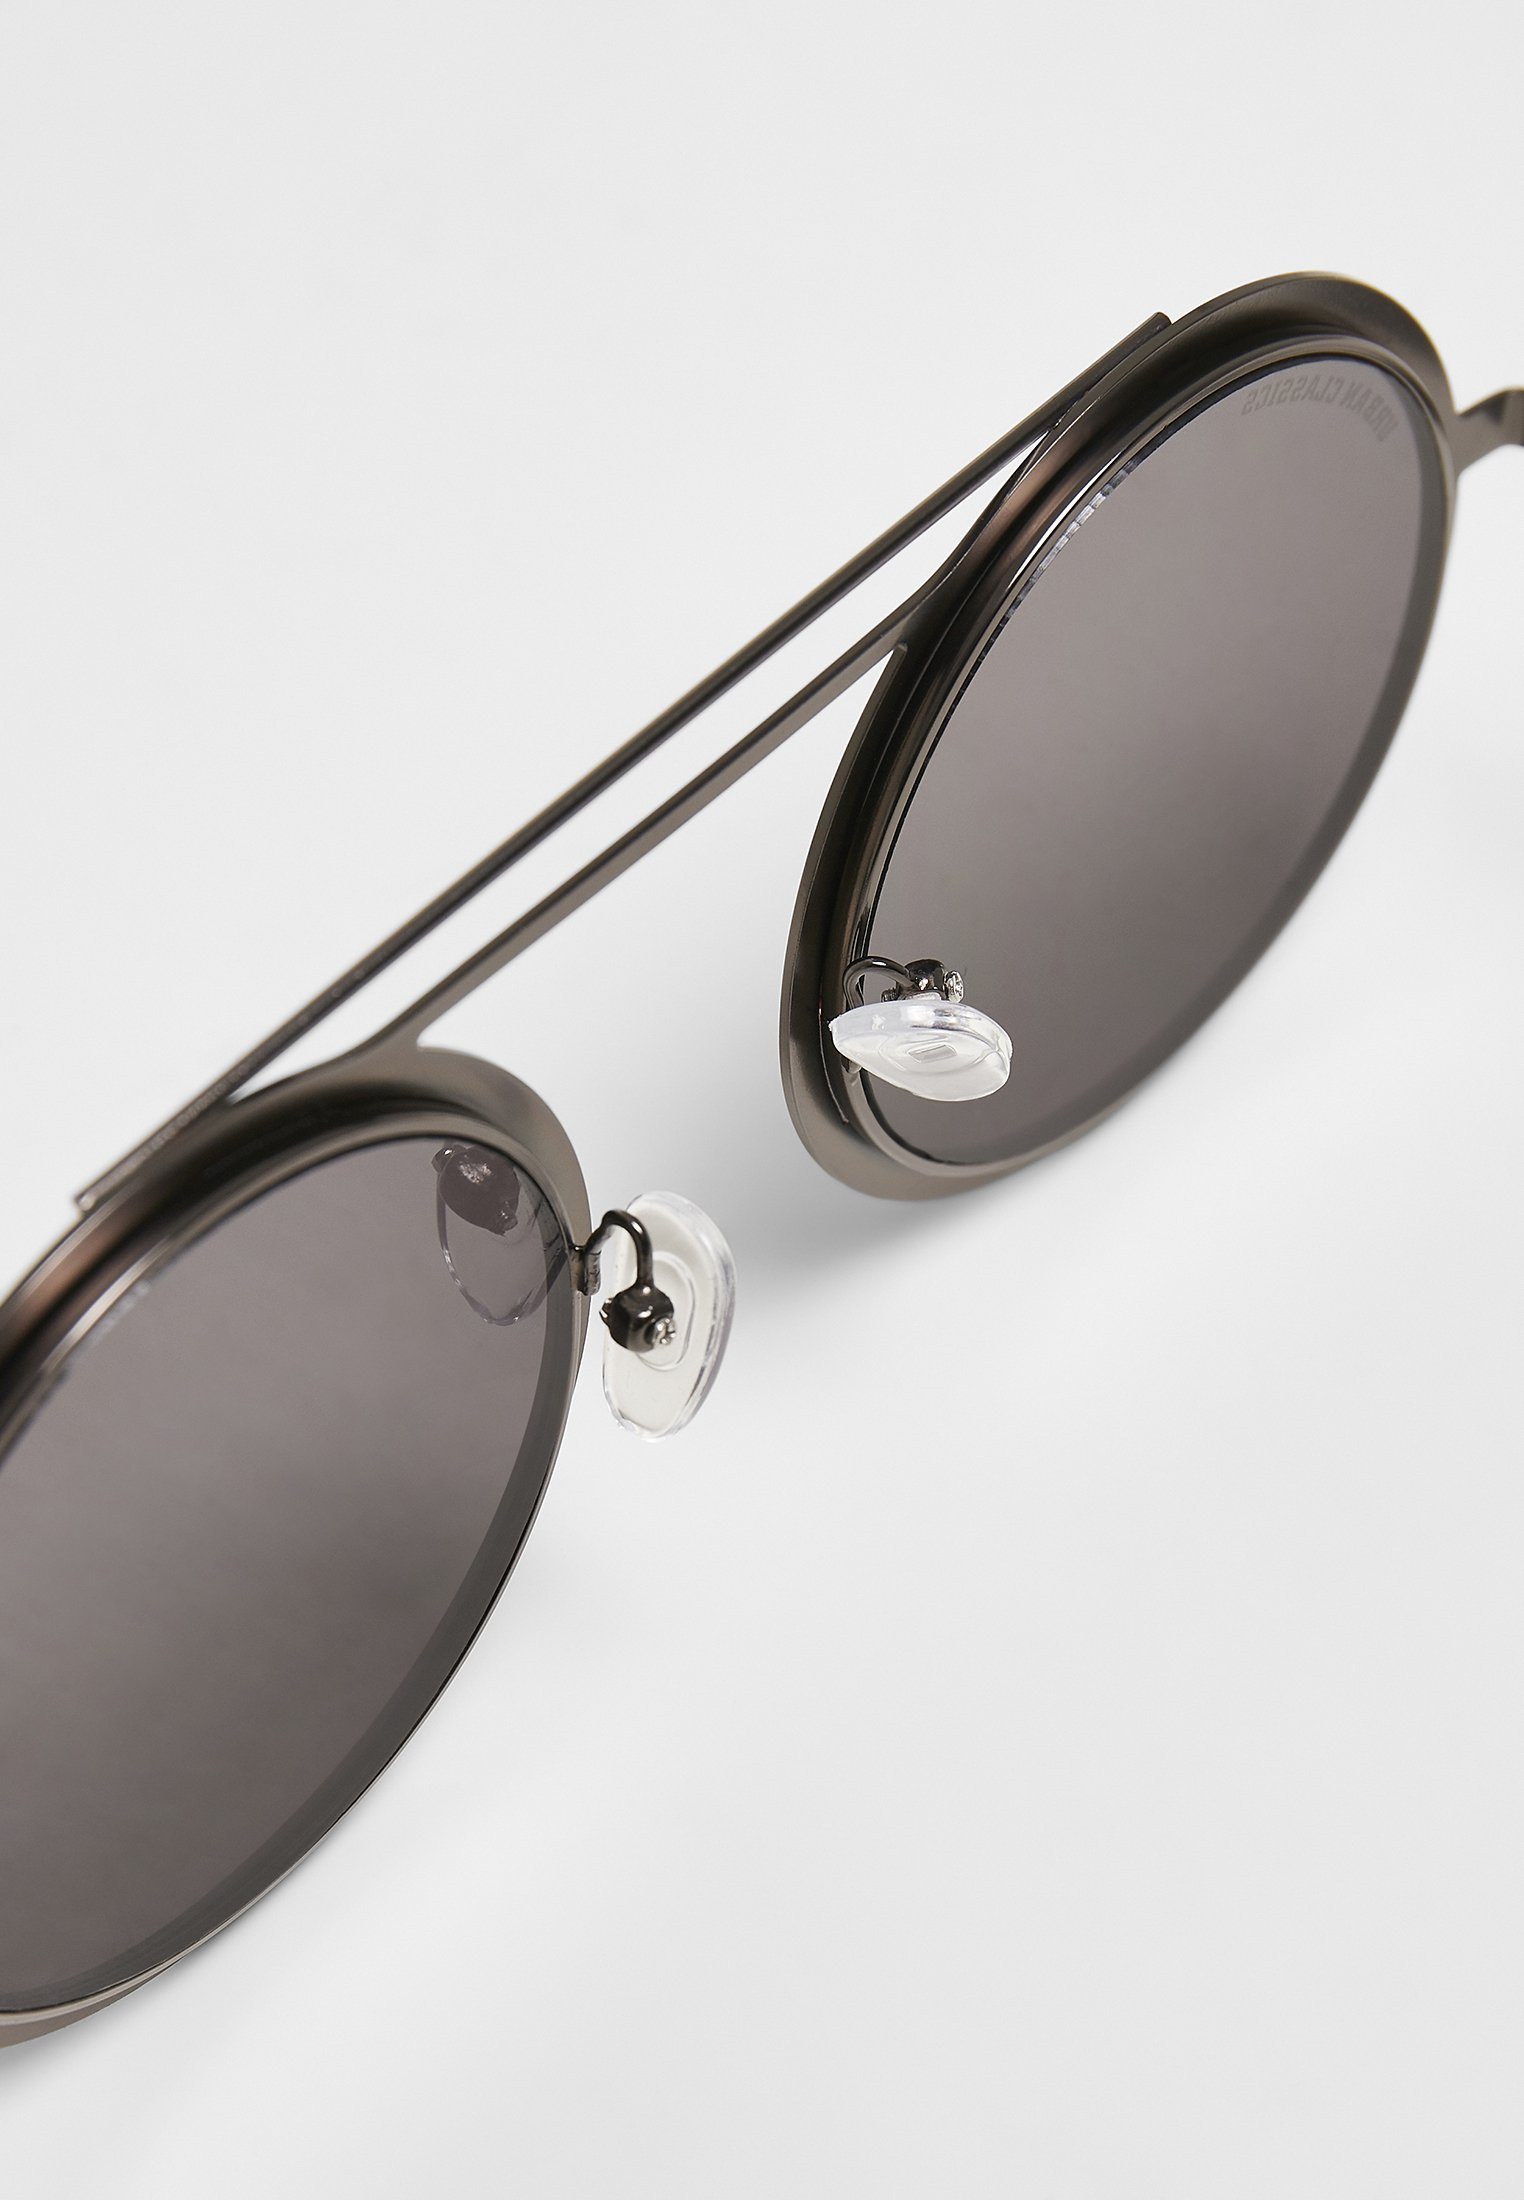 URBAN CLASSICS Sonnenbrille Sunglasses gunmetal/black Accessoires 104 UC